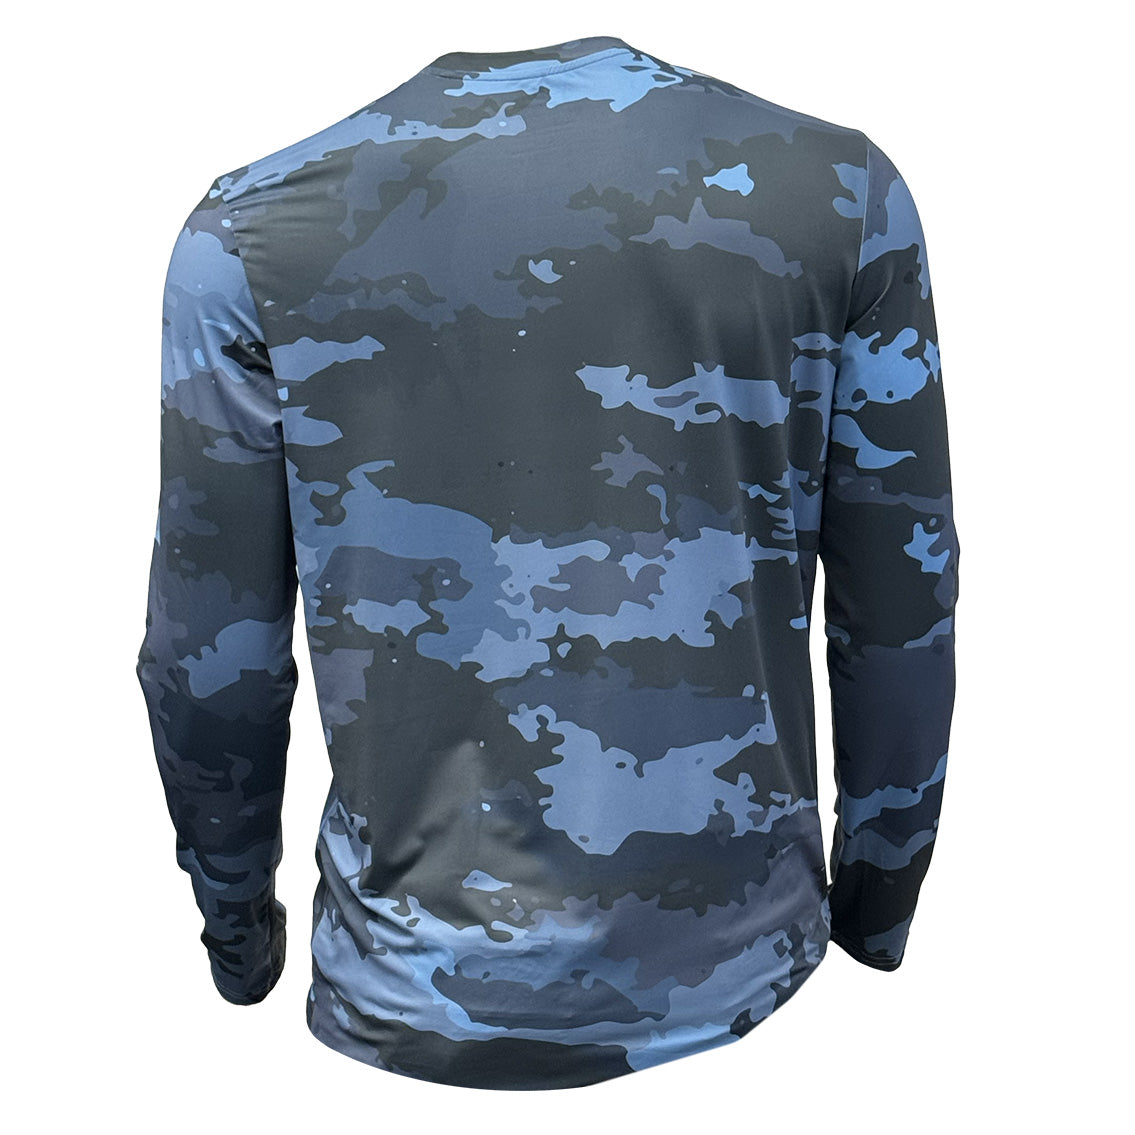 Blue Camo Long Sleeve Performance Fishing Shirt XLarge